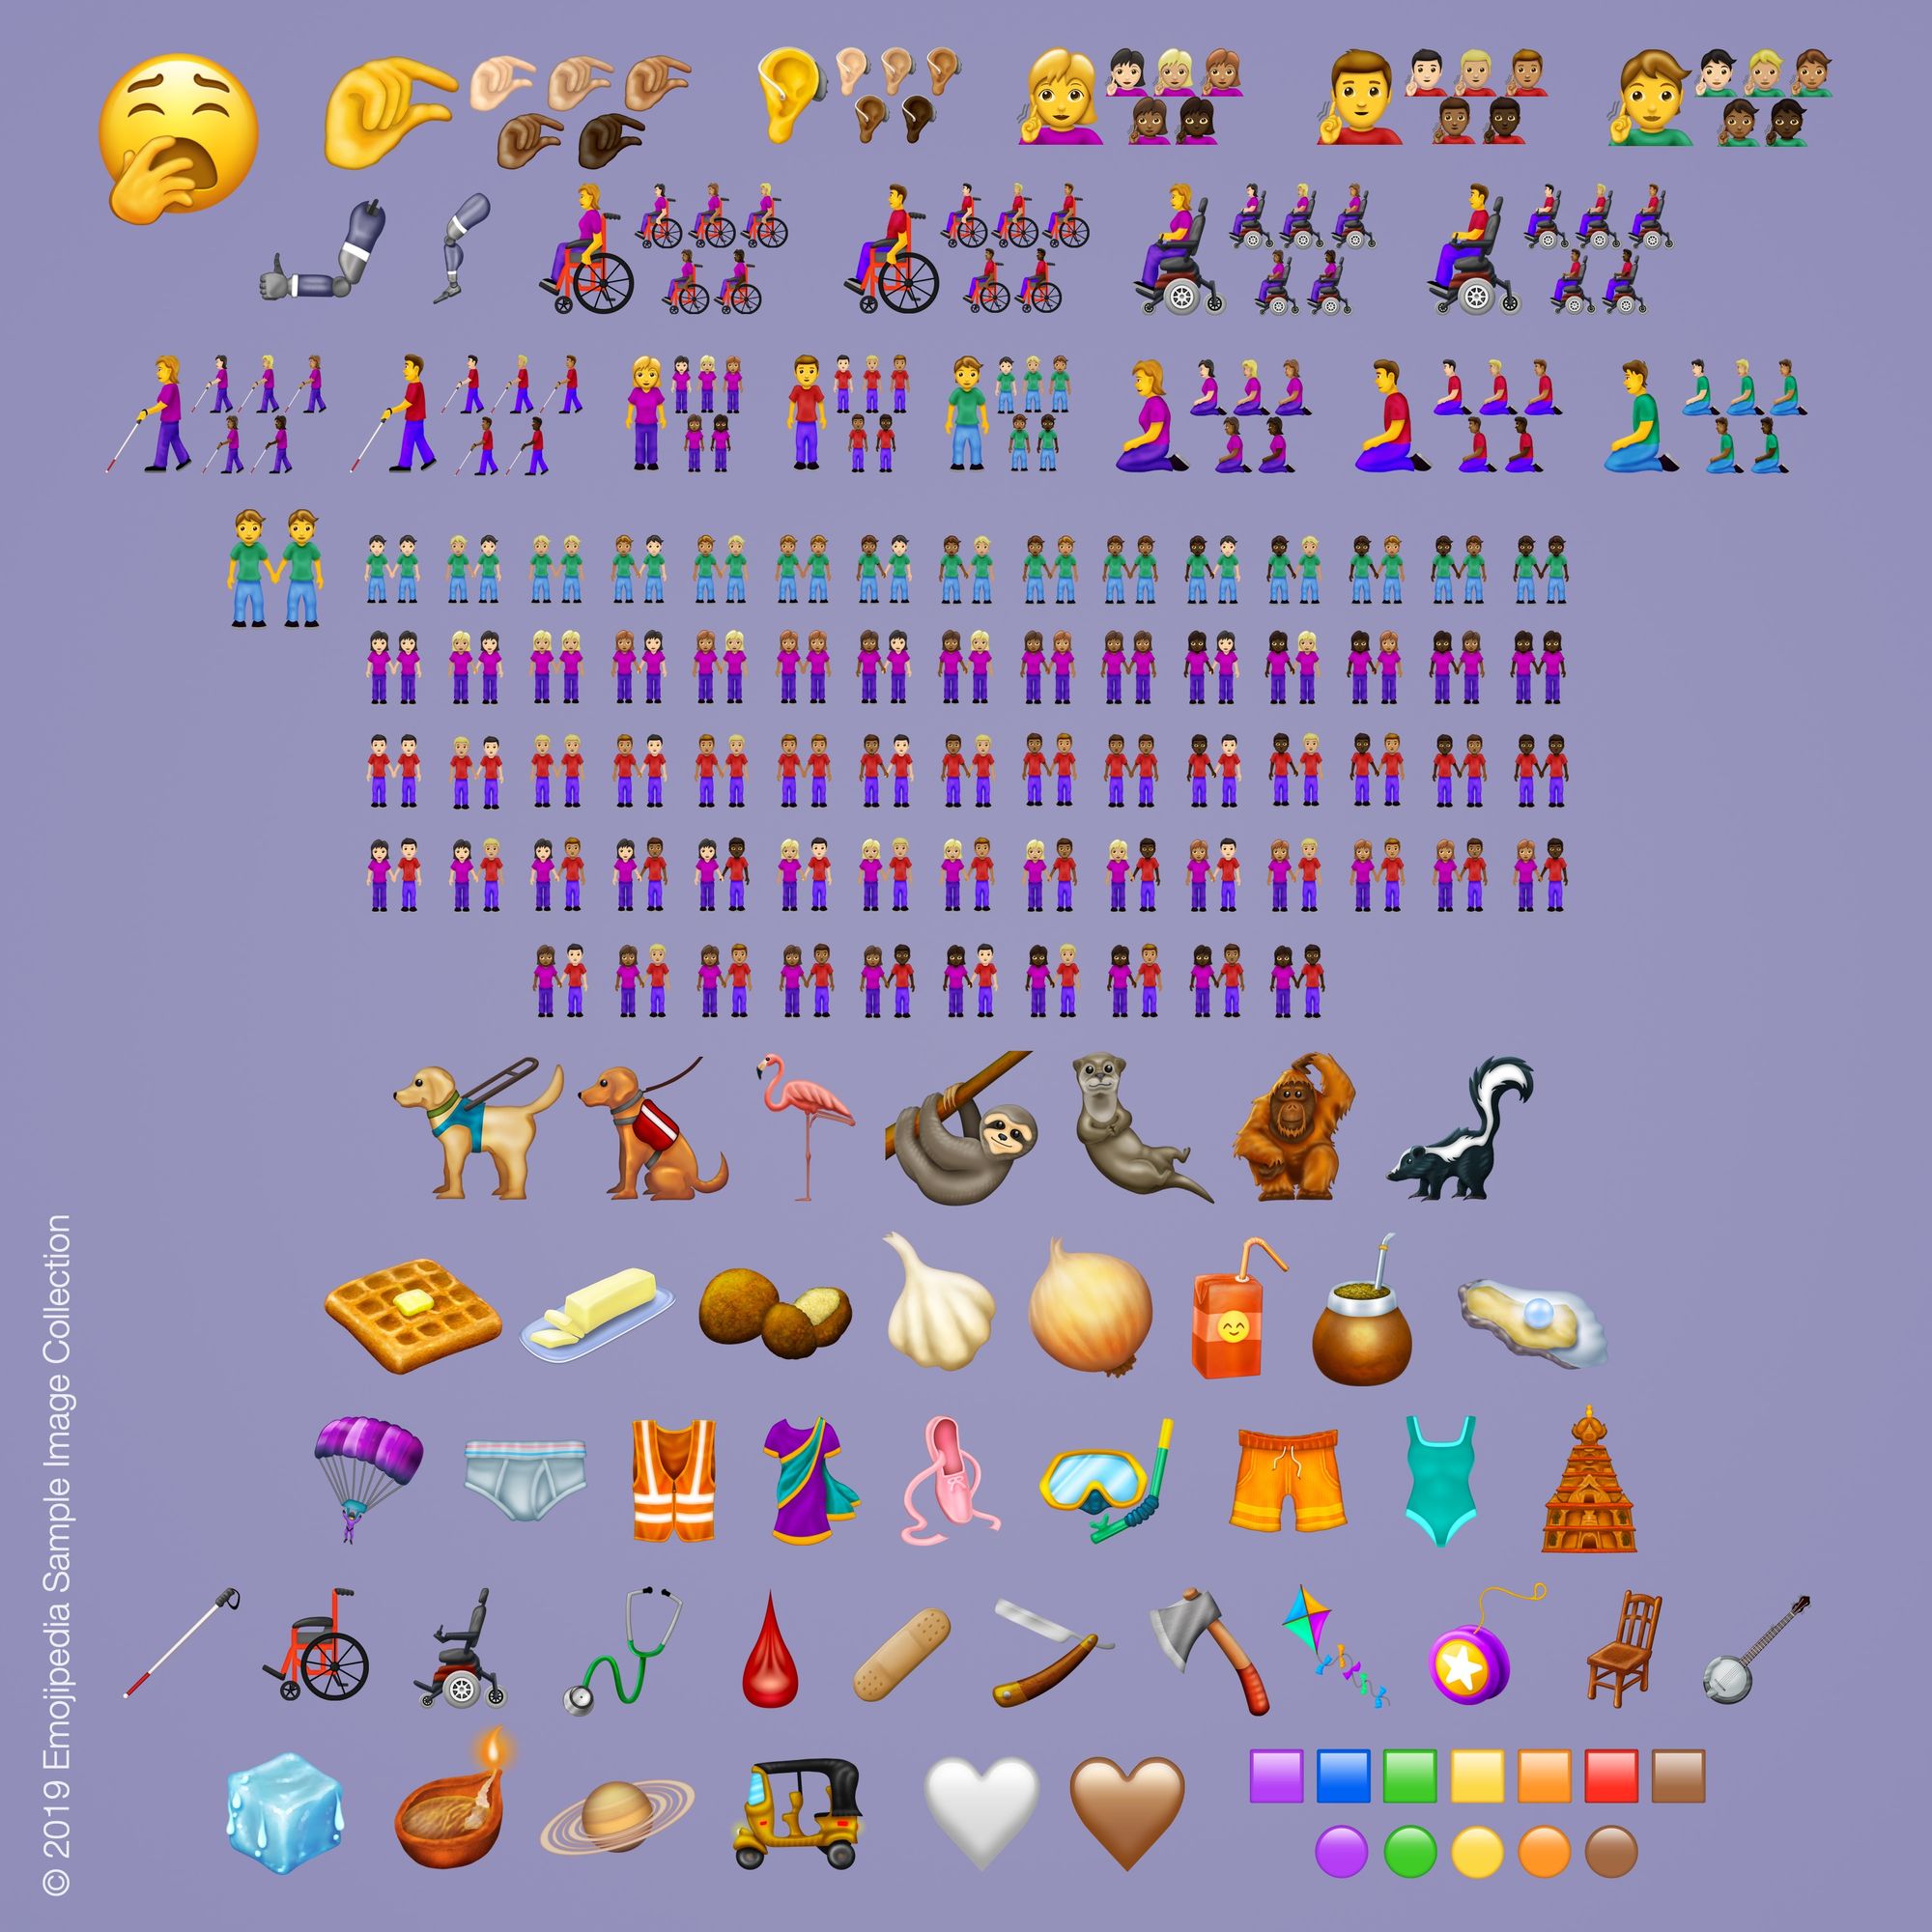 230 novos emojis para 2019